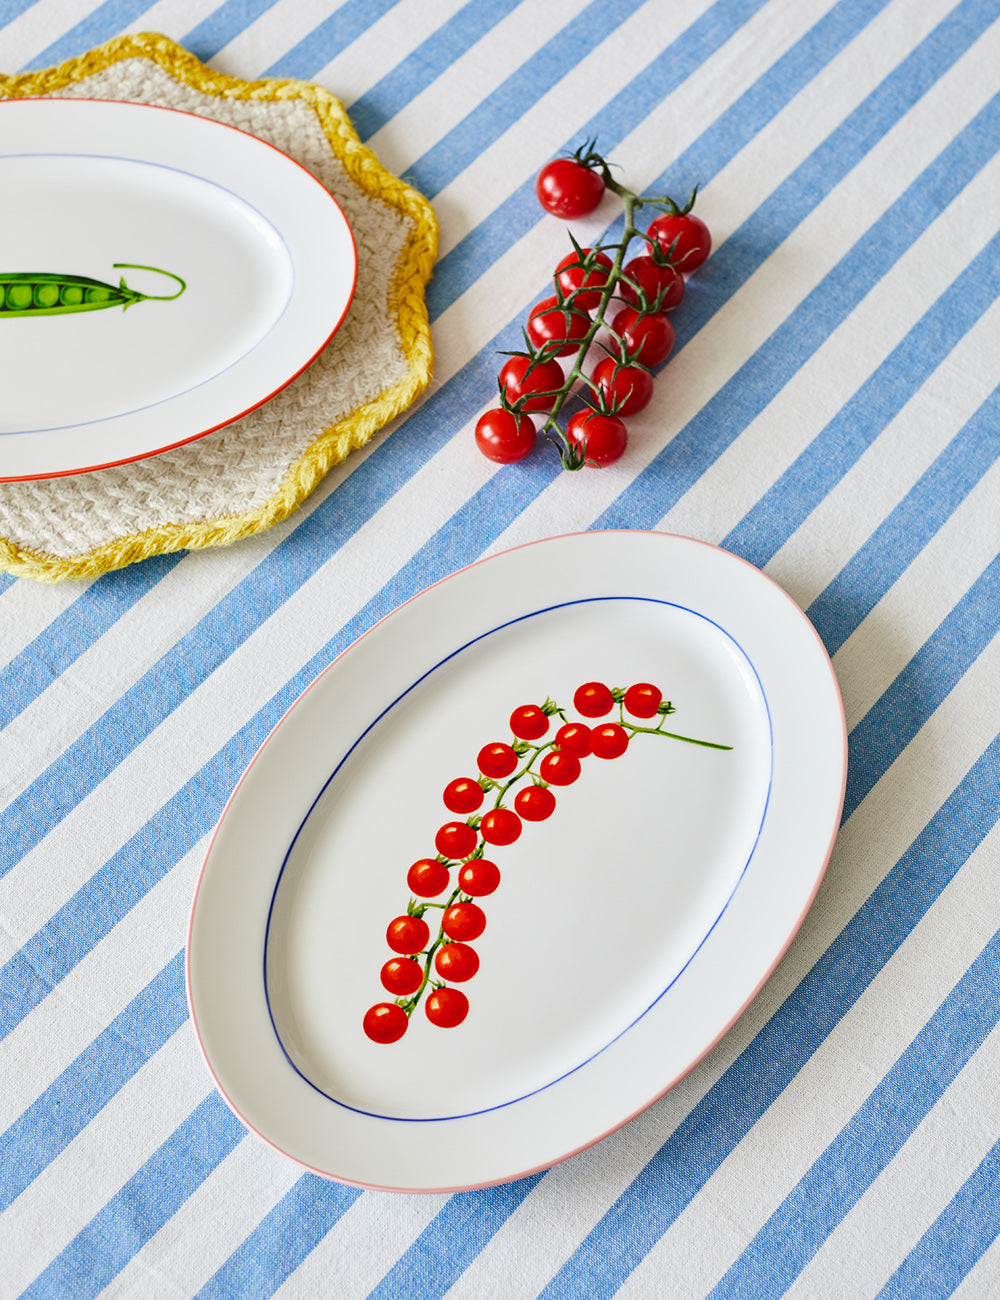 Cherry Tomato Plate